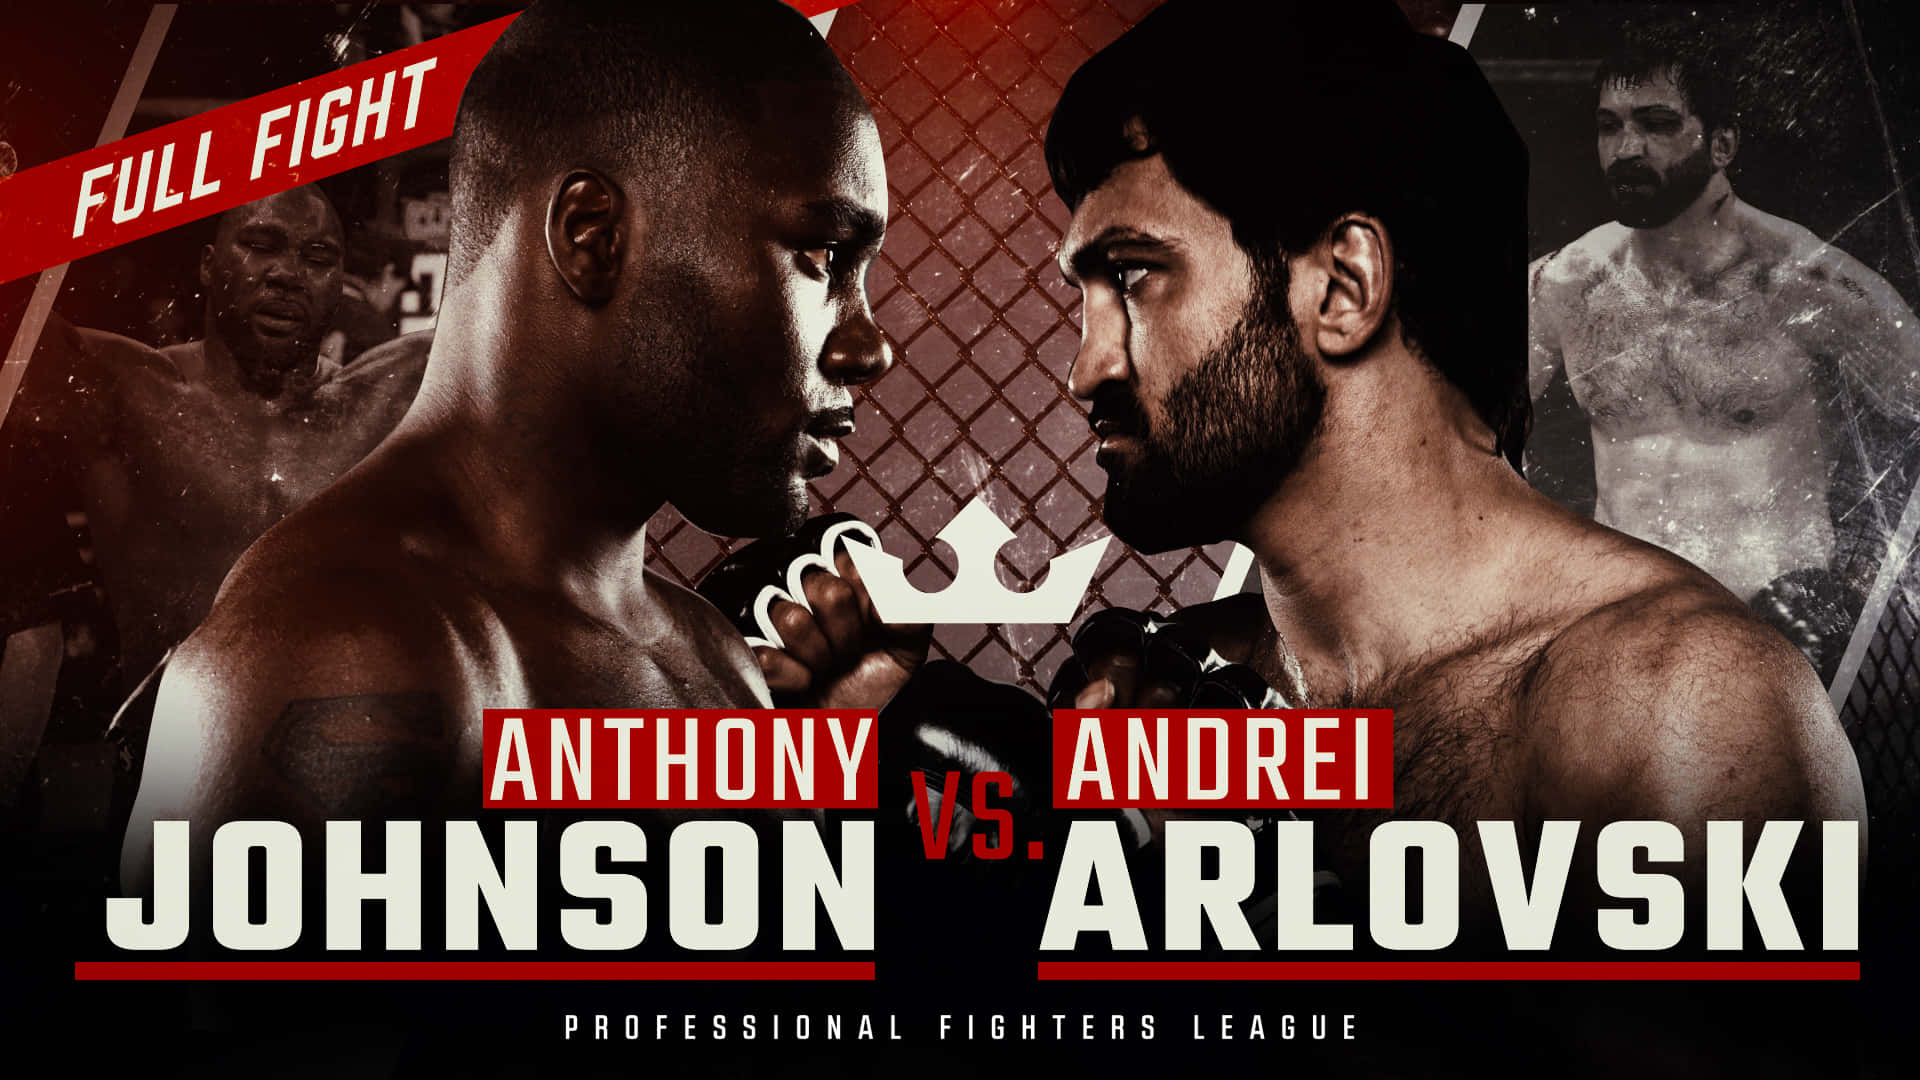 Anthonyjohnson Och Andrei Arlovski World Series Of Fighting 2. Wallpaper